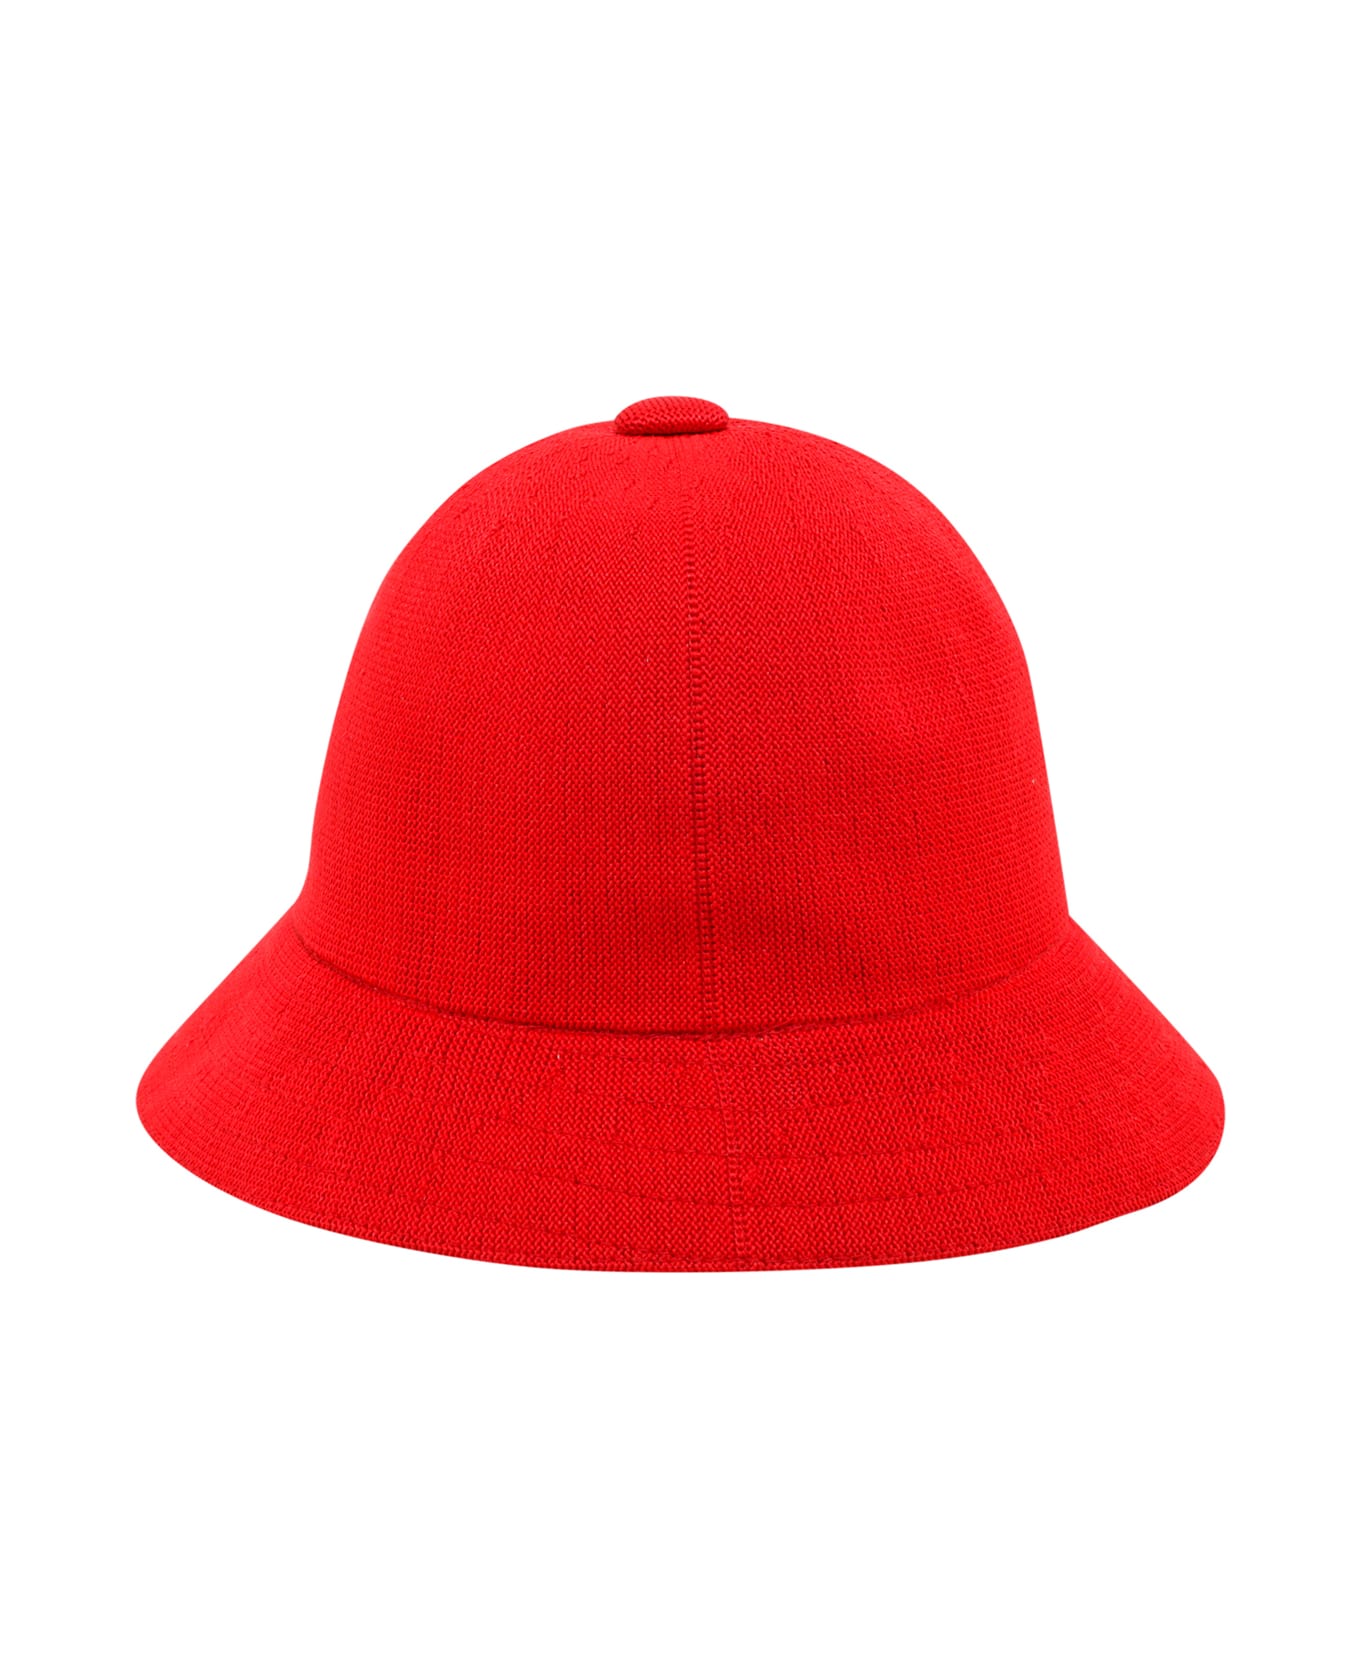 Kangol Cloche - Red 帽子